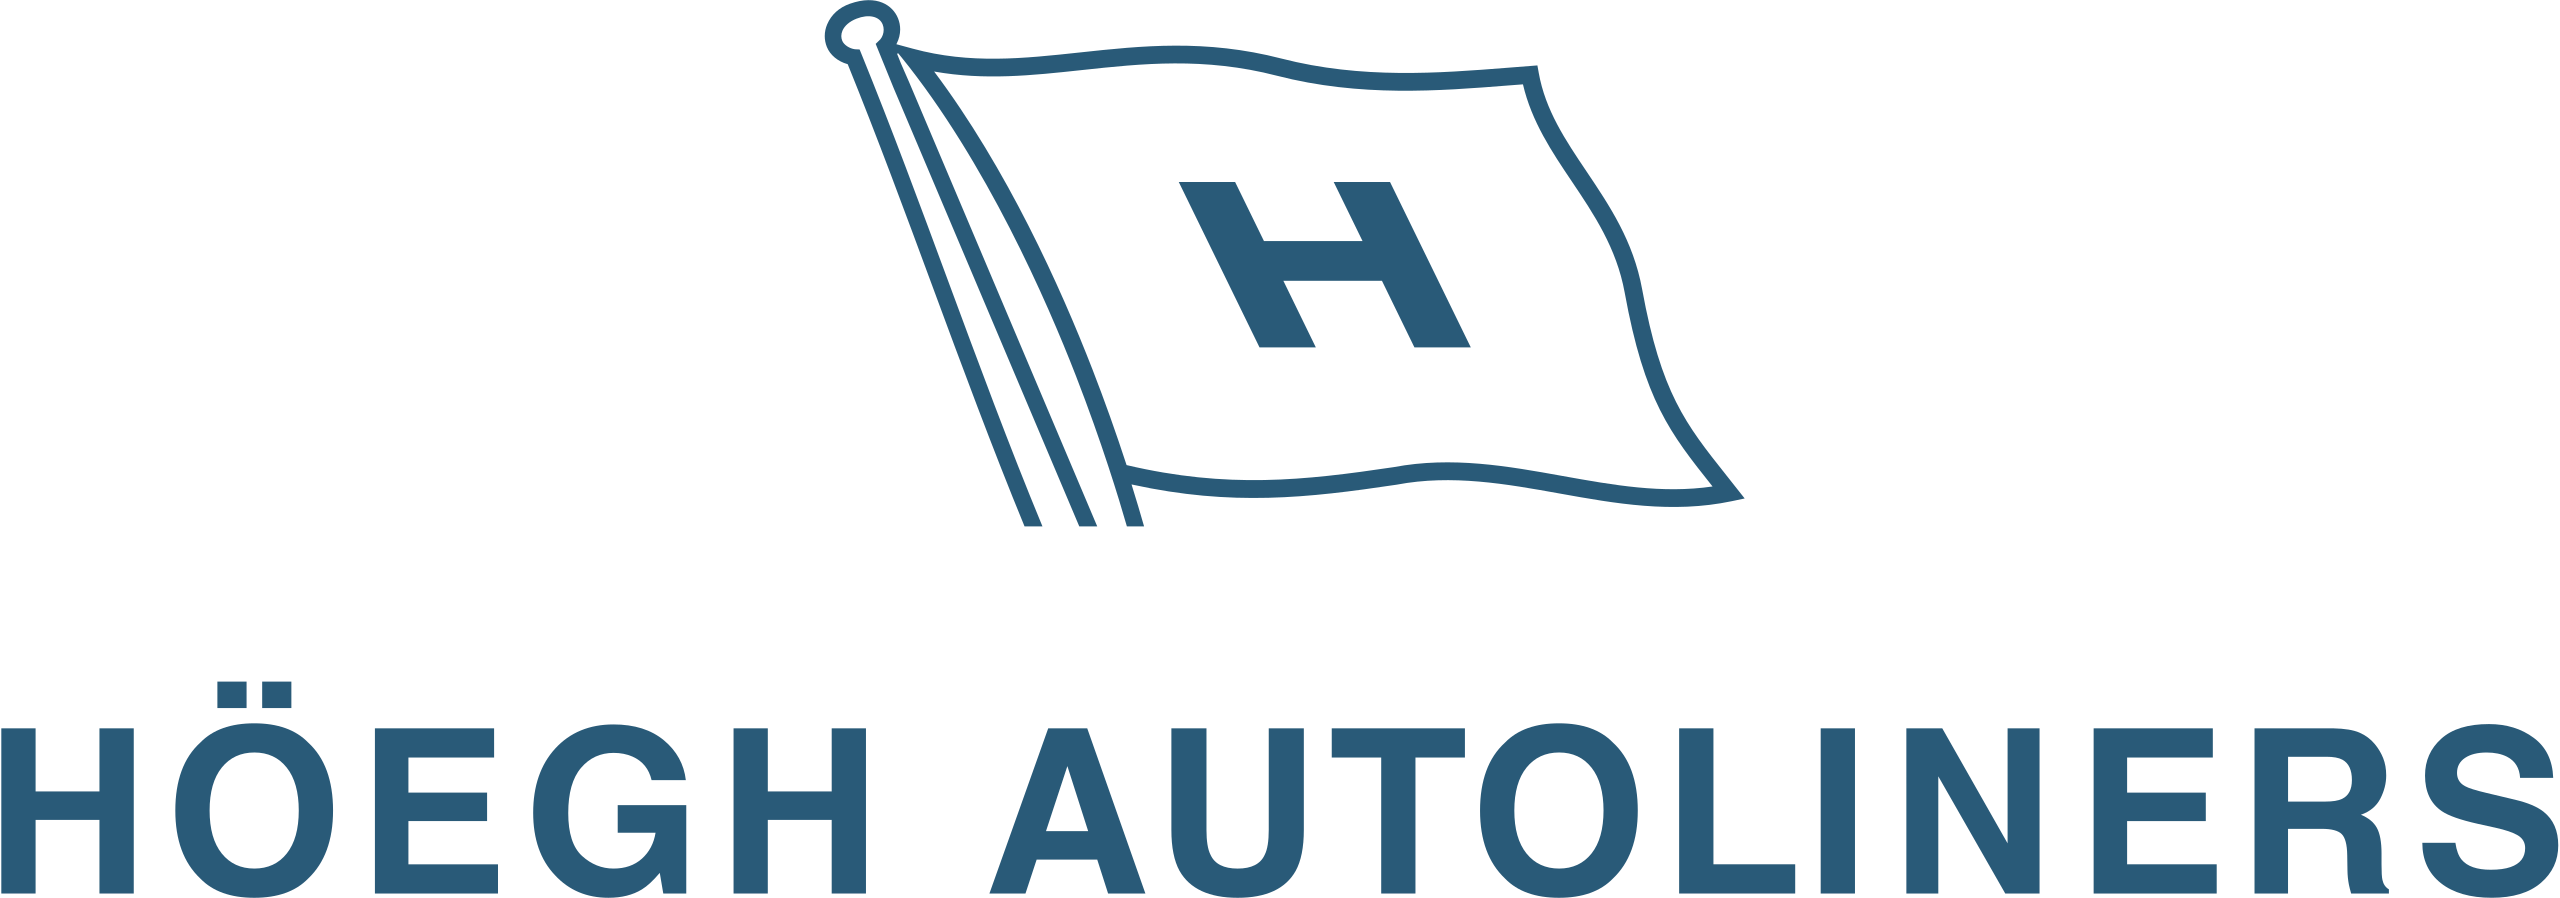 Höegh Autoliners Management AS